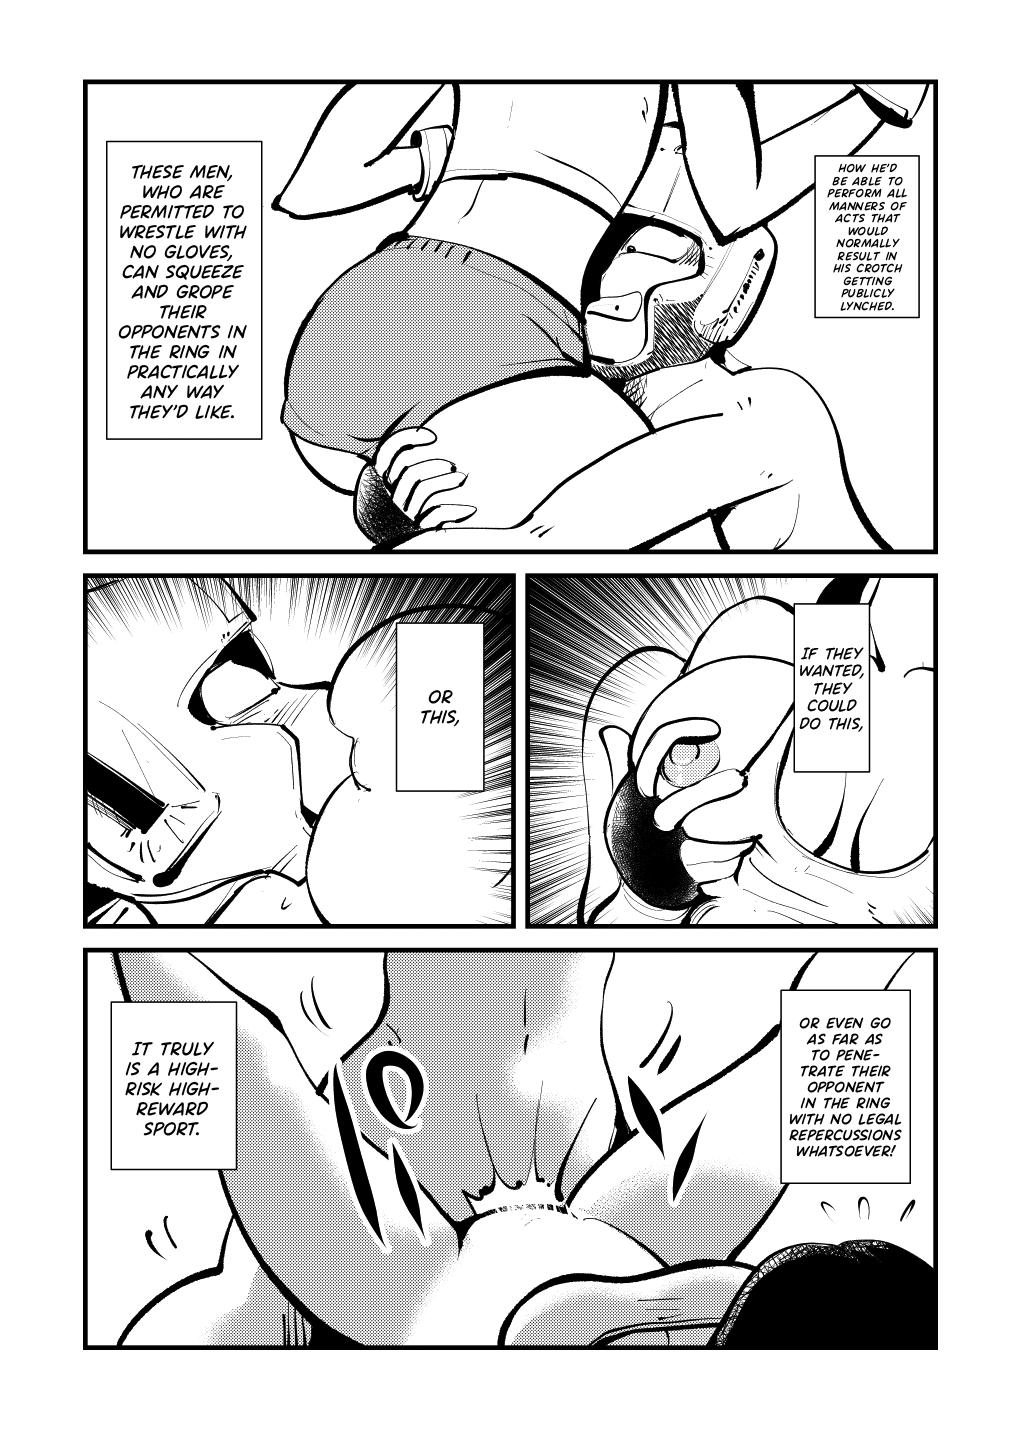 Chick Dick Boxing - Original Con - Page 3